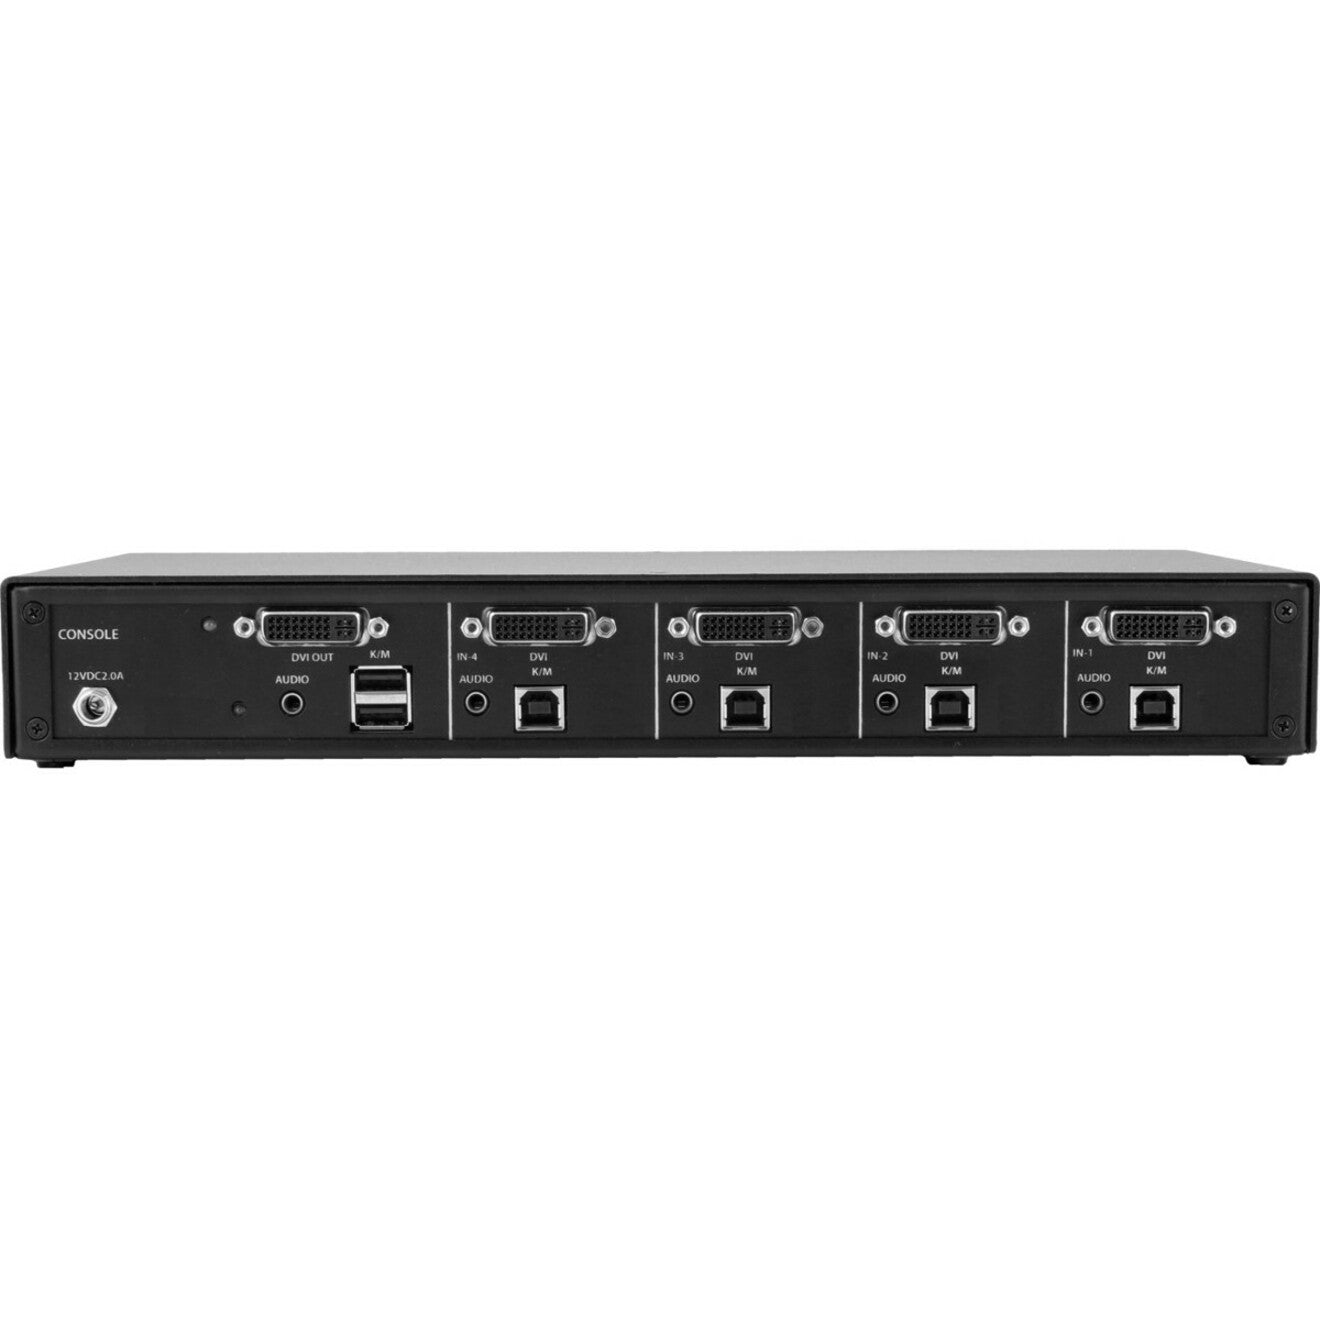 Black Box SS4P-SH-DVI-U NIAP 3.0 Secure 4-Port Single-Head DVI-I KVM Switch, 3840 x 2160 Resolution, 3 Year Warranty